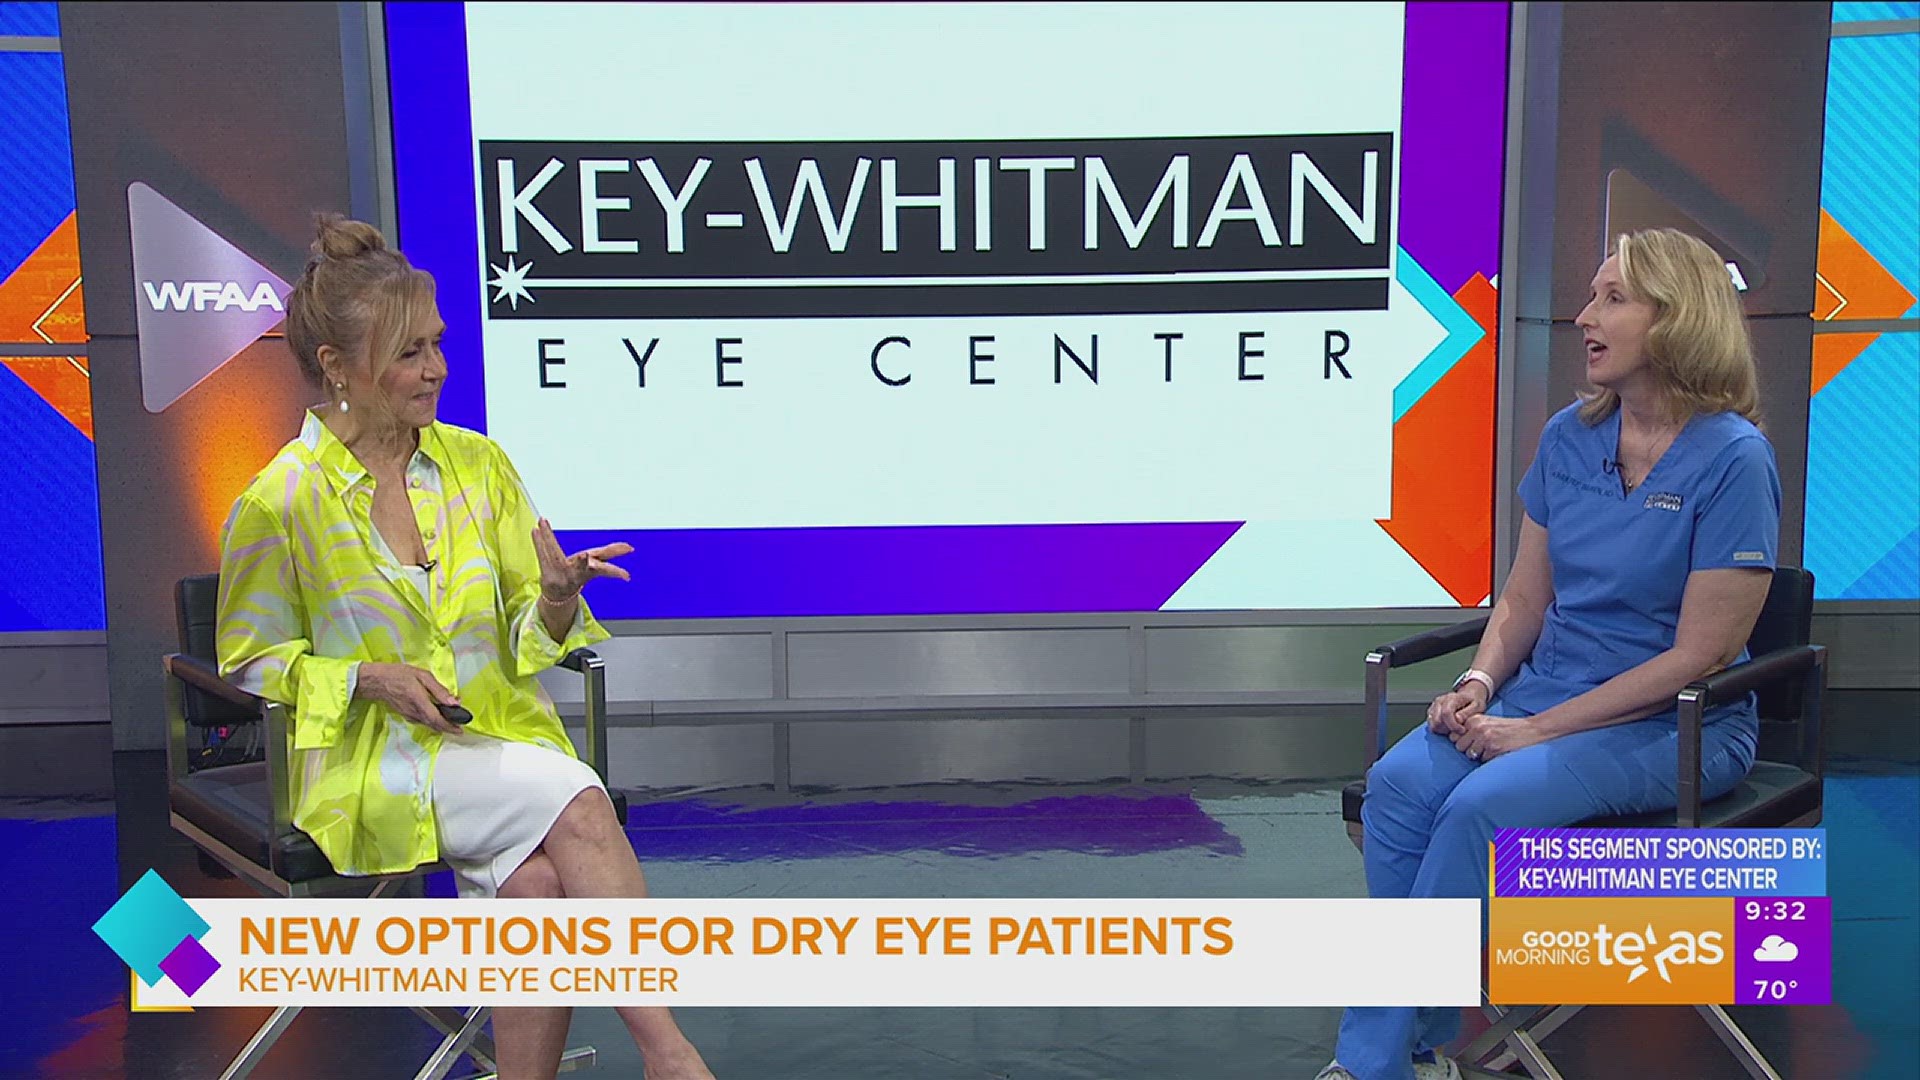 This segment is sponsored by Key-Whitman Eye Center.